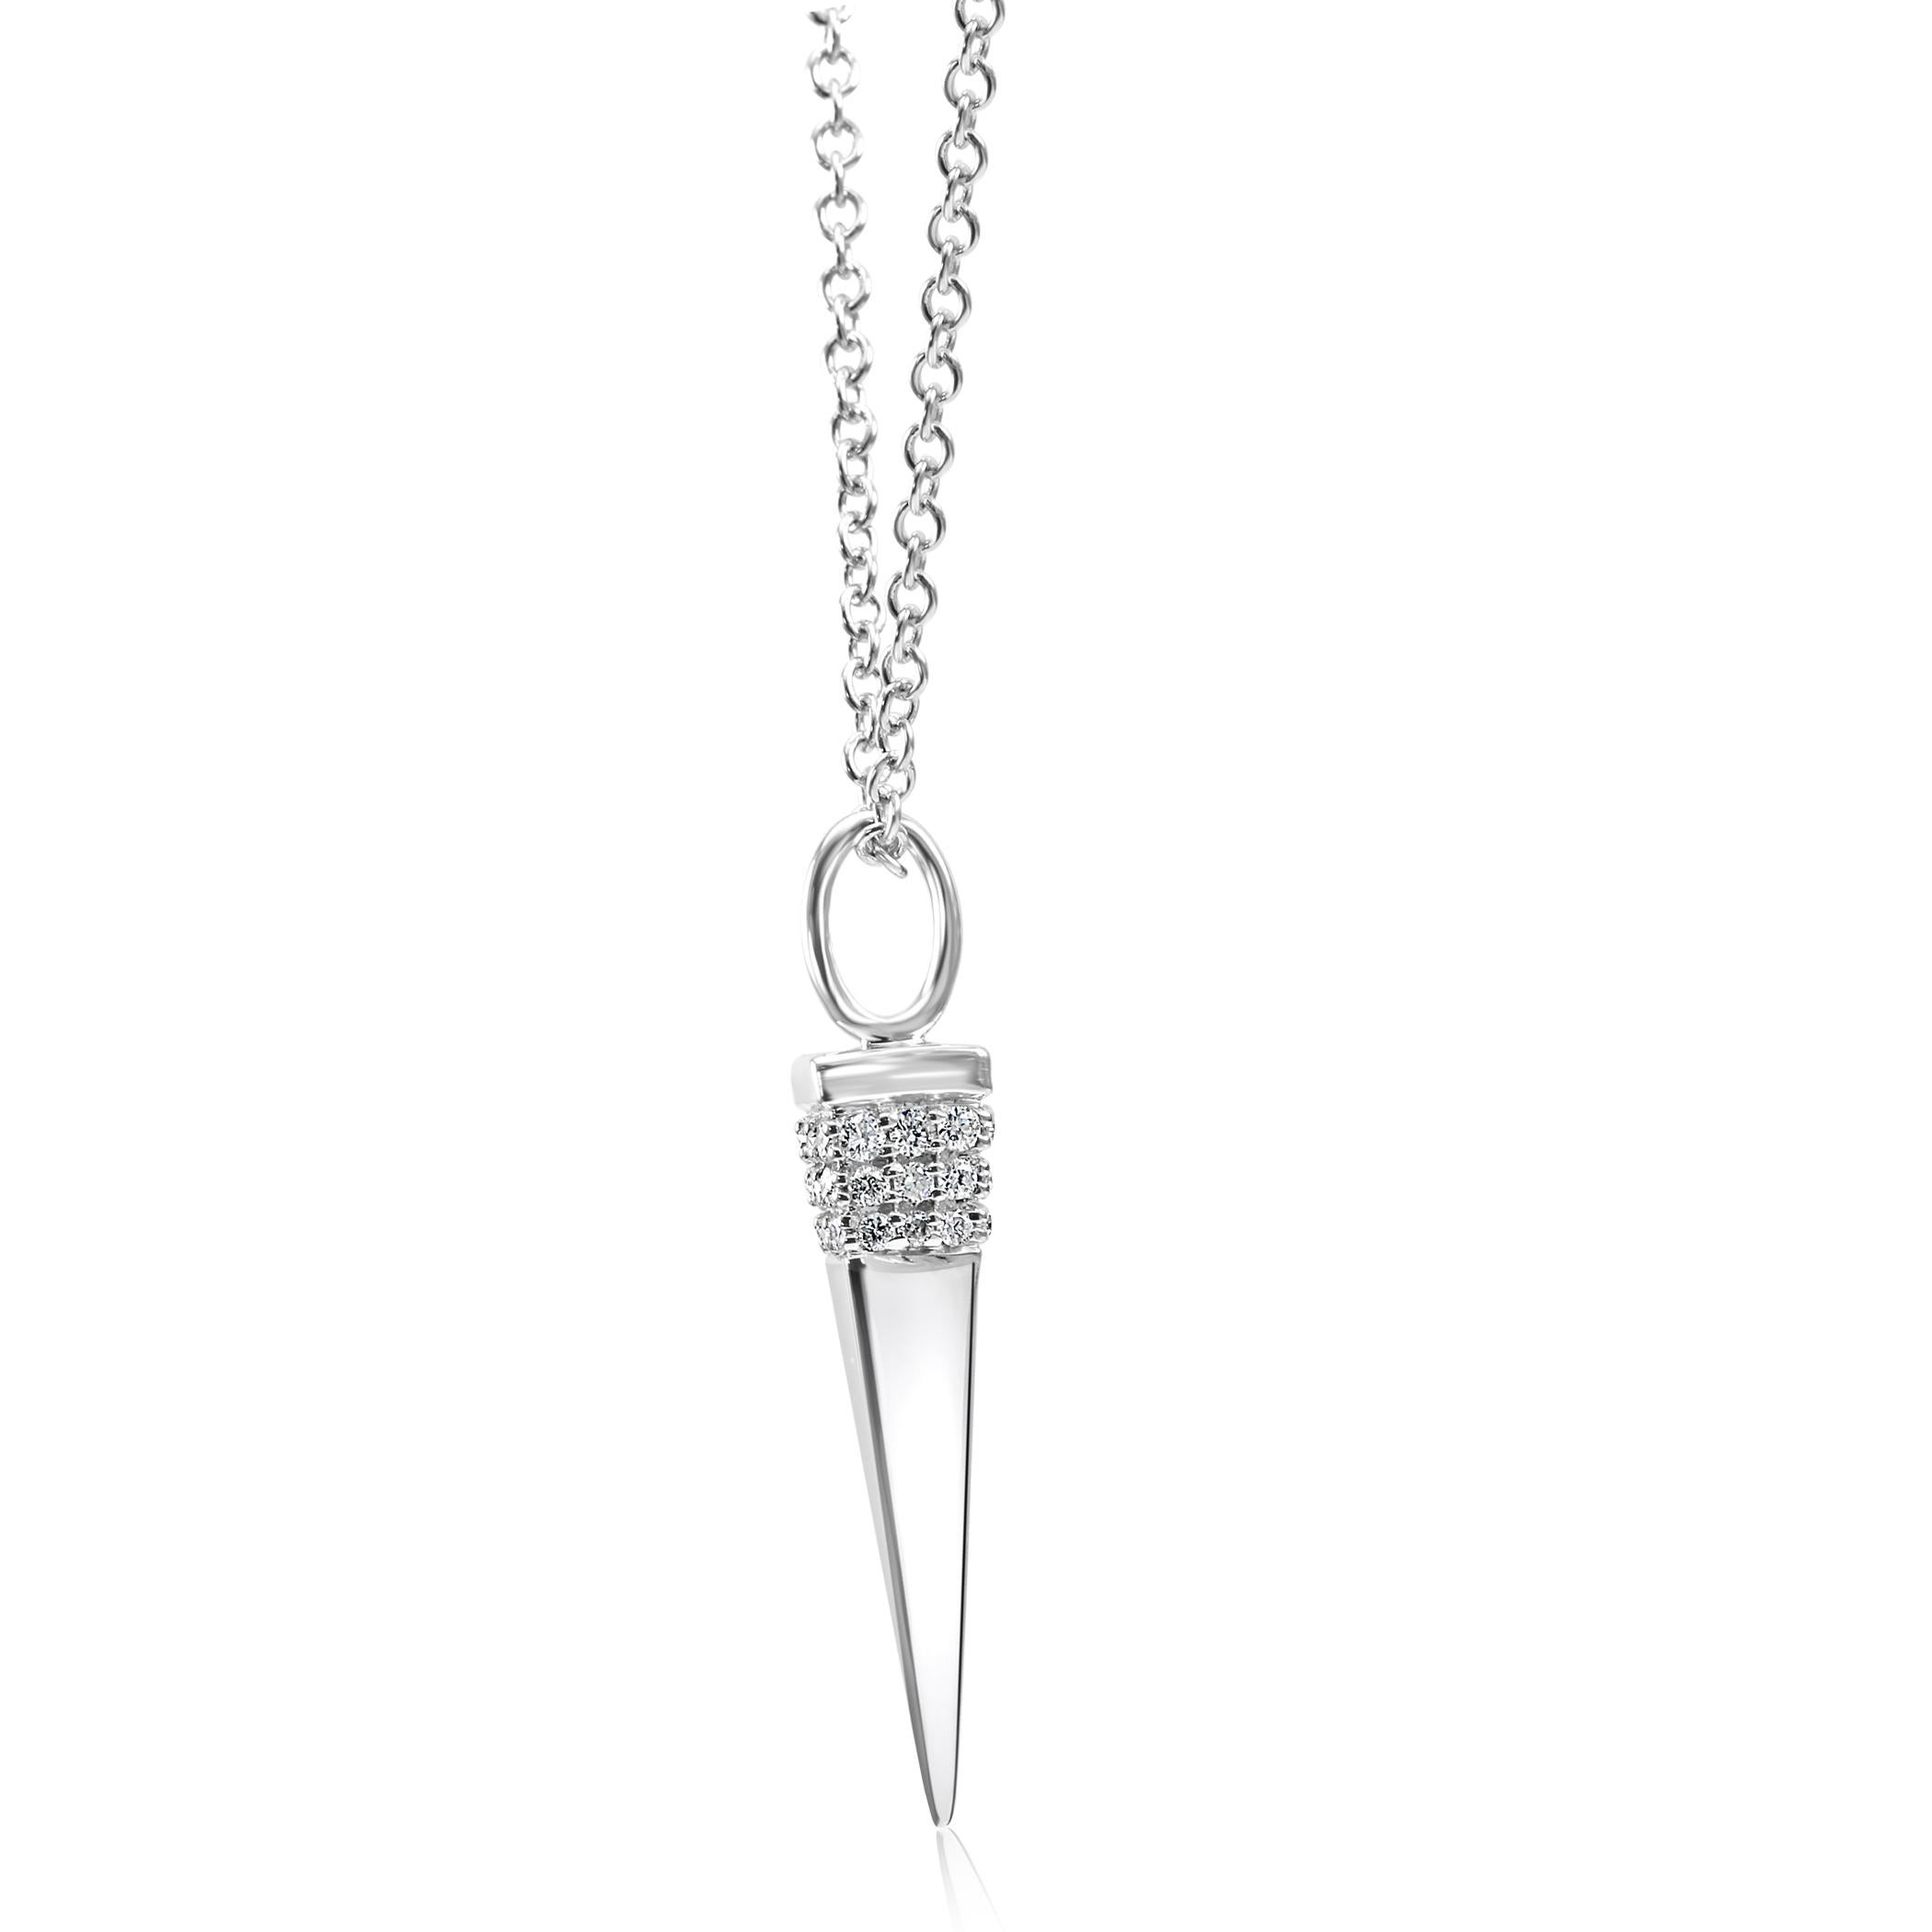 Contemporary Round White Diamonds Fashion Drop Pendant 14 Karat White Gold Chain Necklace